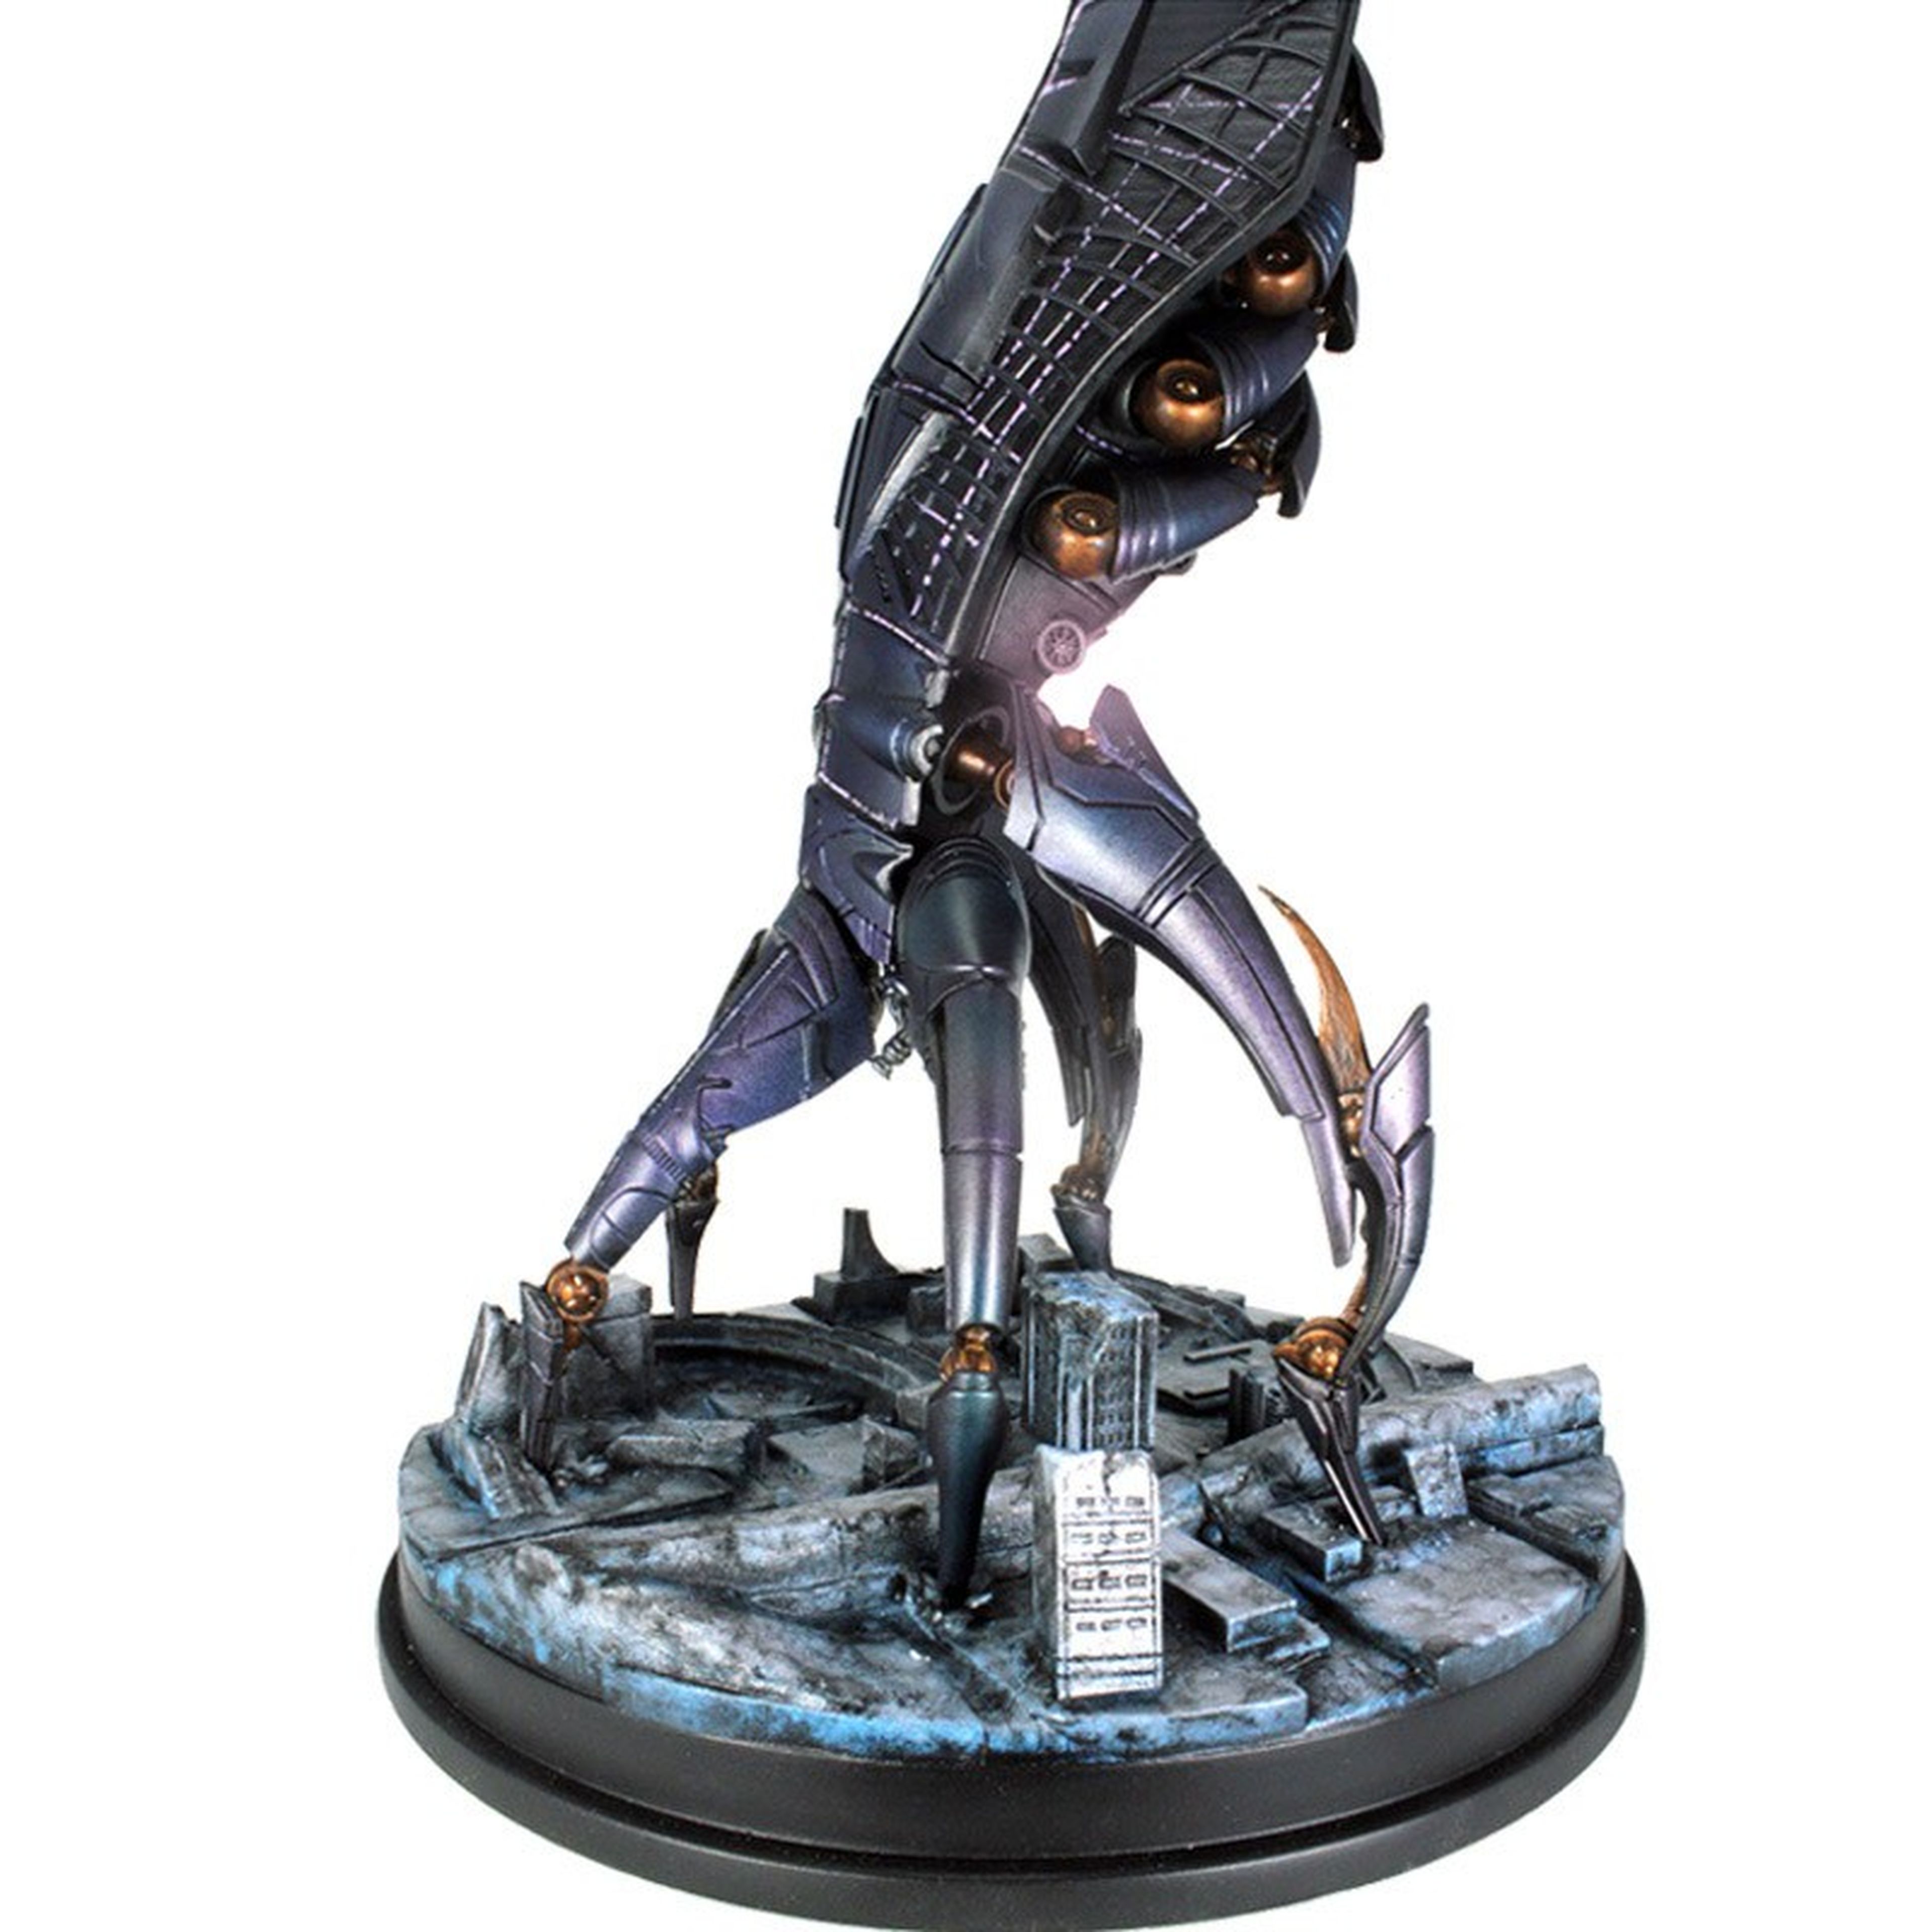 La escultura de Mass Effect 3 con DLC